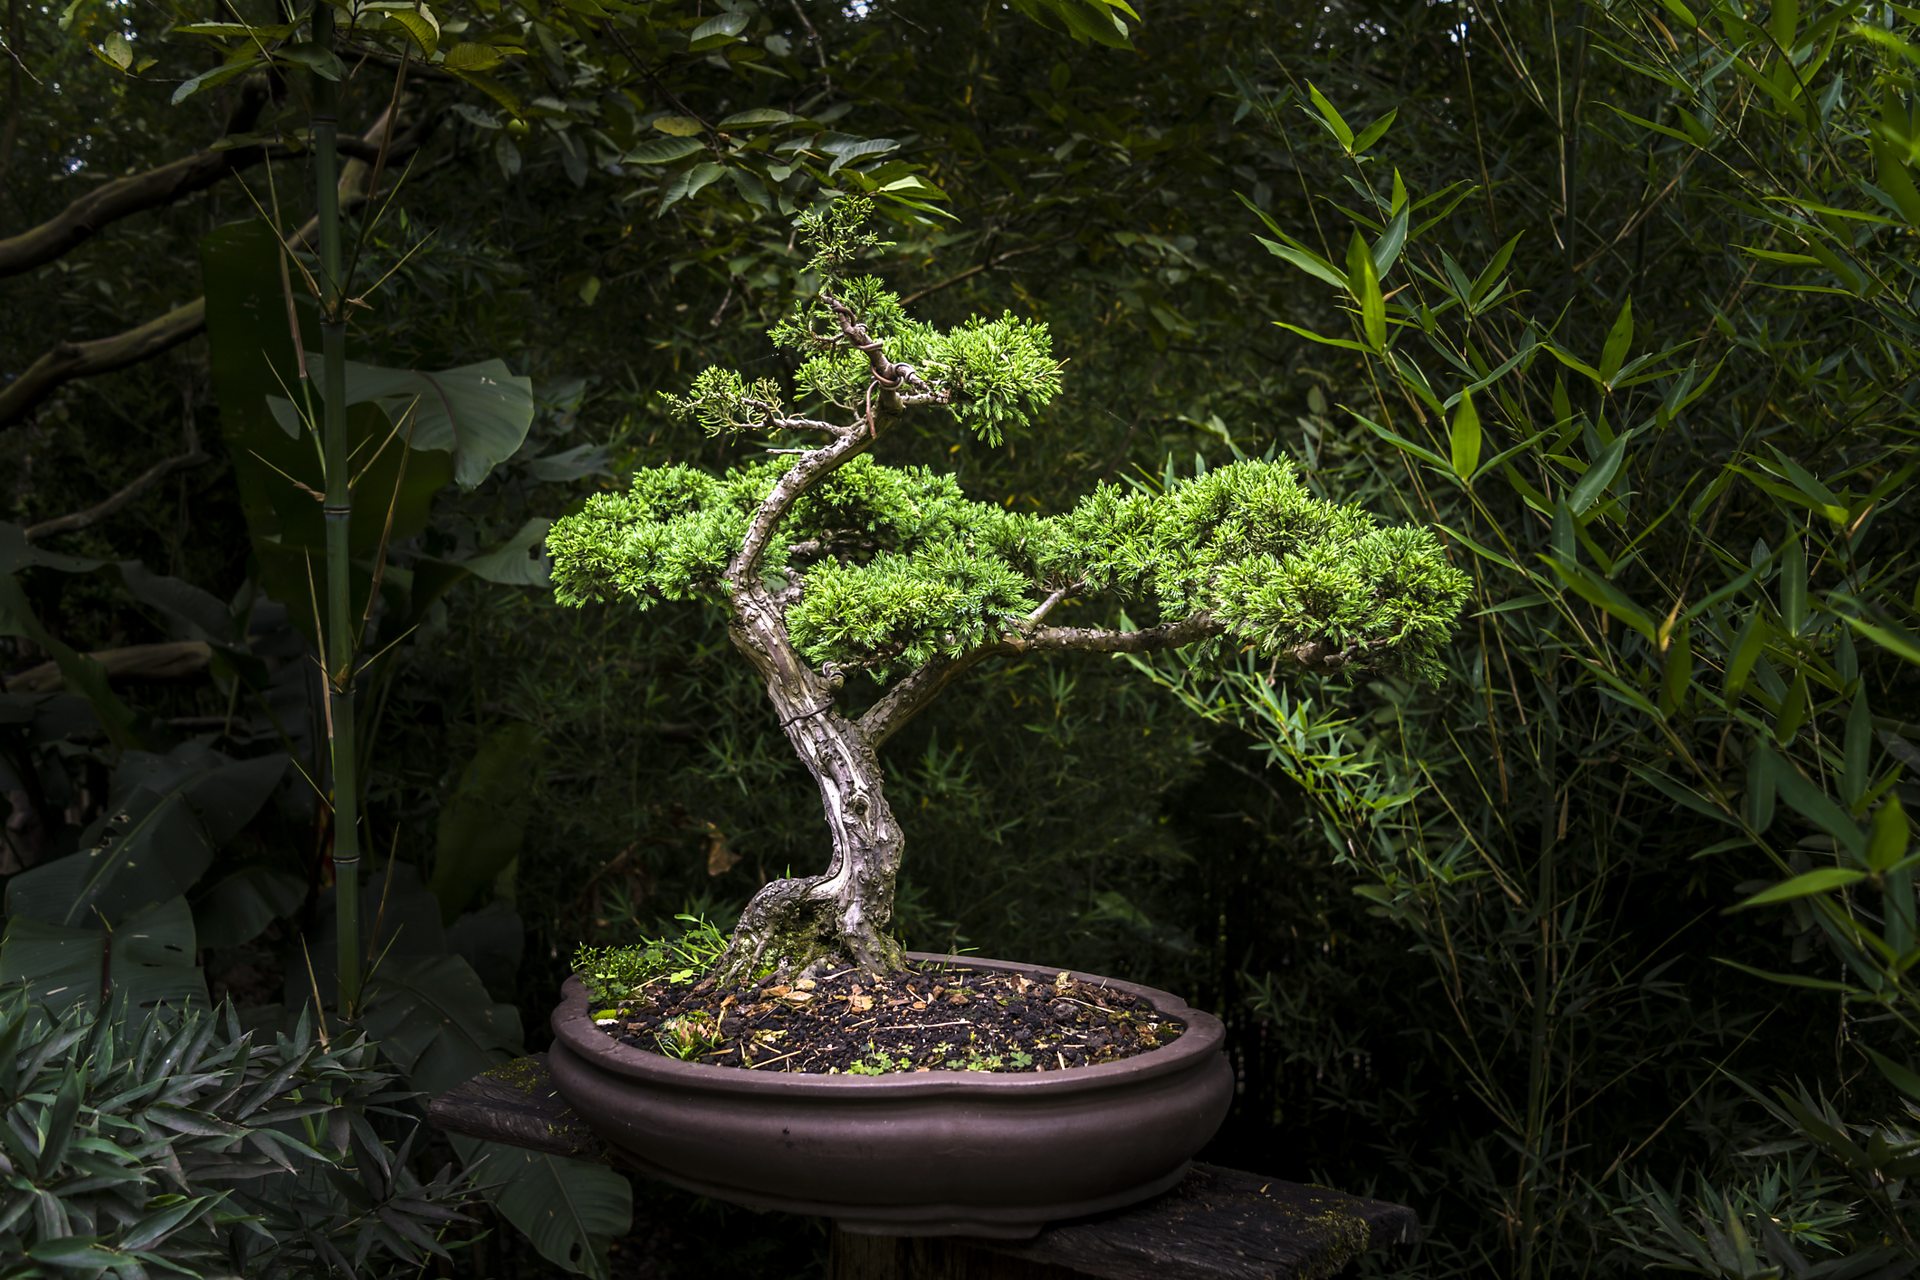 The ancient art of Japanese bonsai